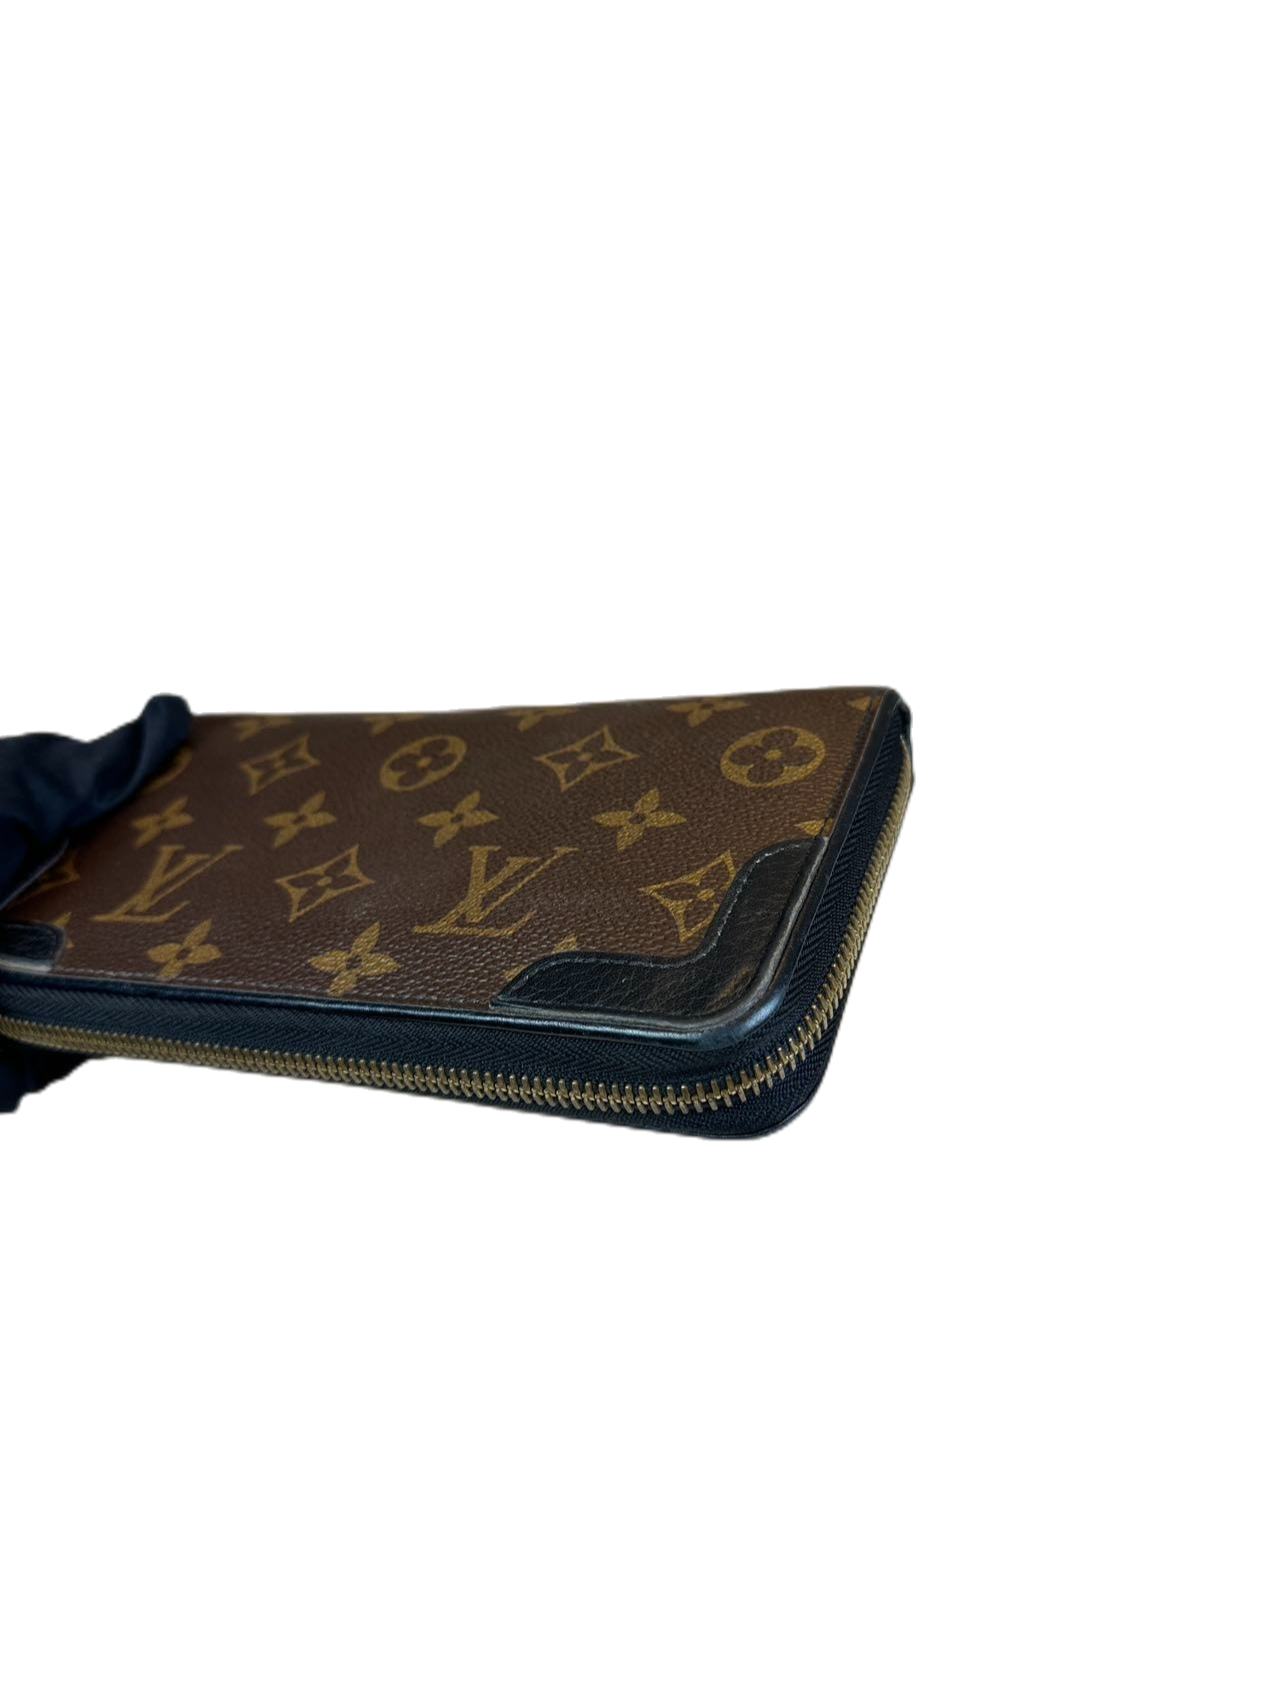 Preloved Louis Vuitton Monogram Canvas Leather wallet